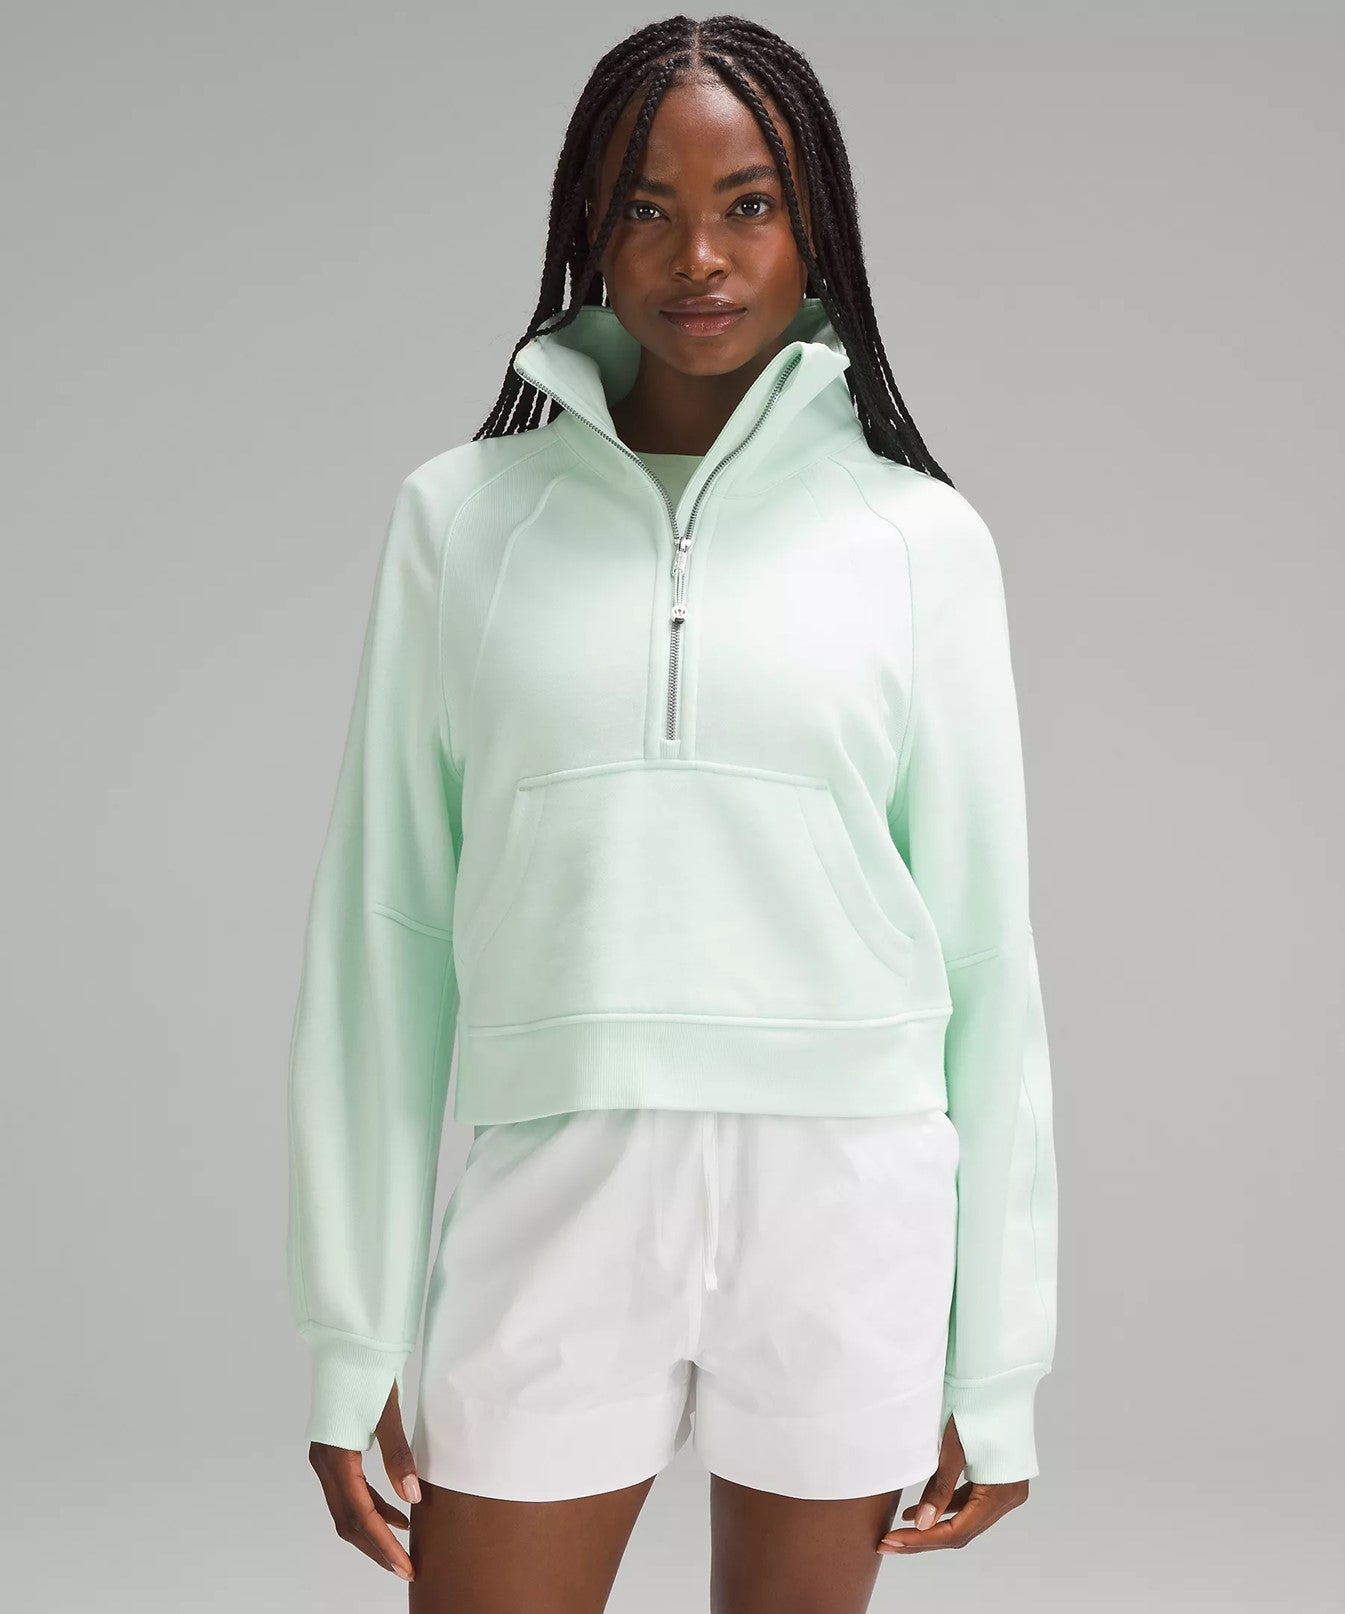 Lululemon Women's Special Edition Jacket Hoodie White Size 2 Full Zip